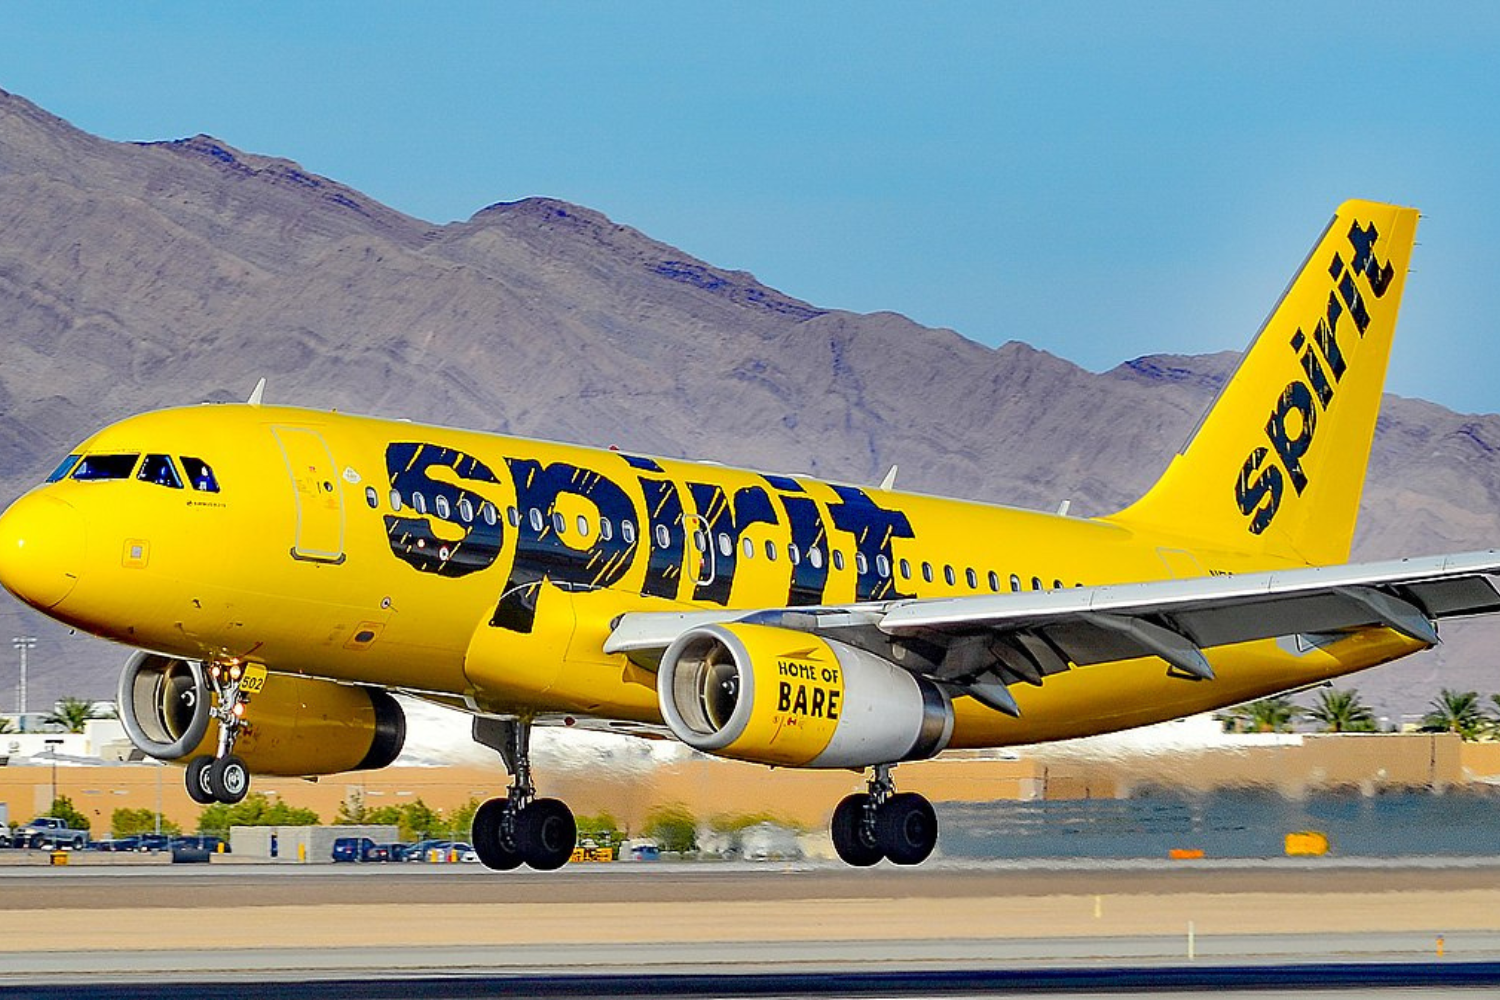 a yellow spirit flight on the runway